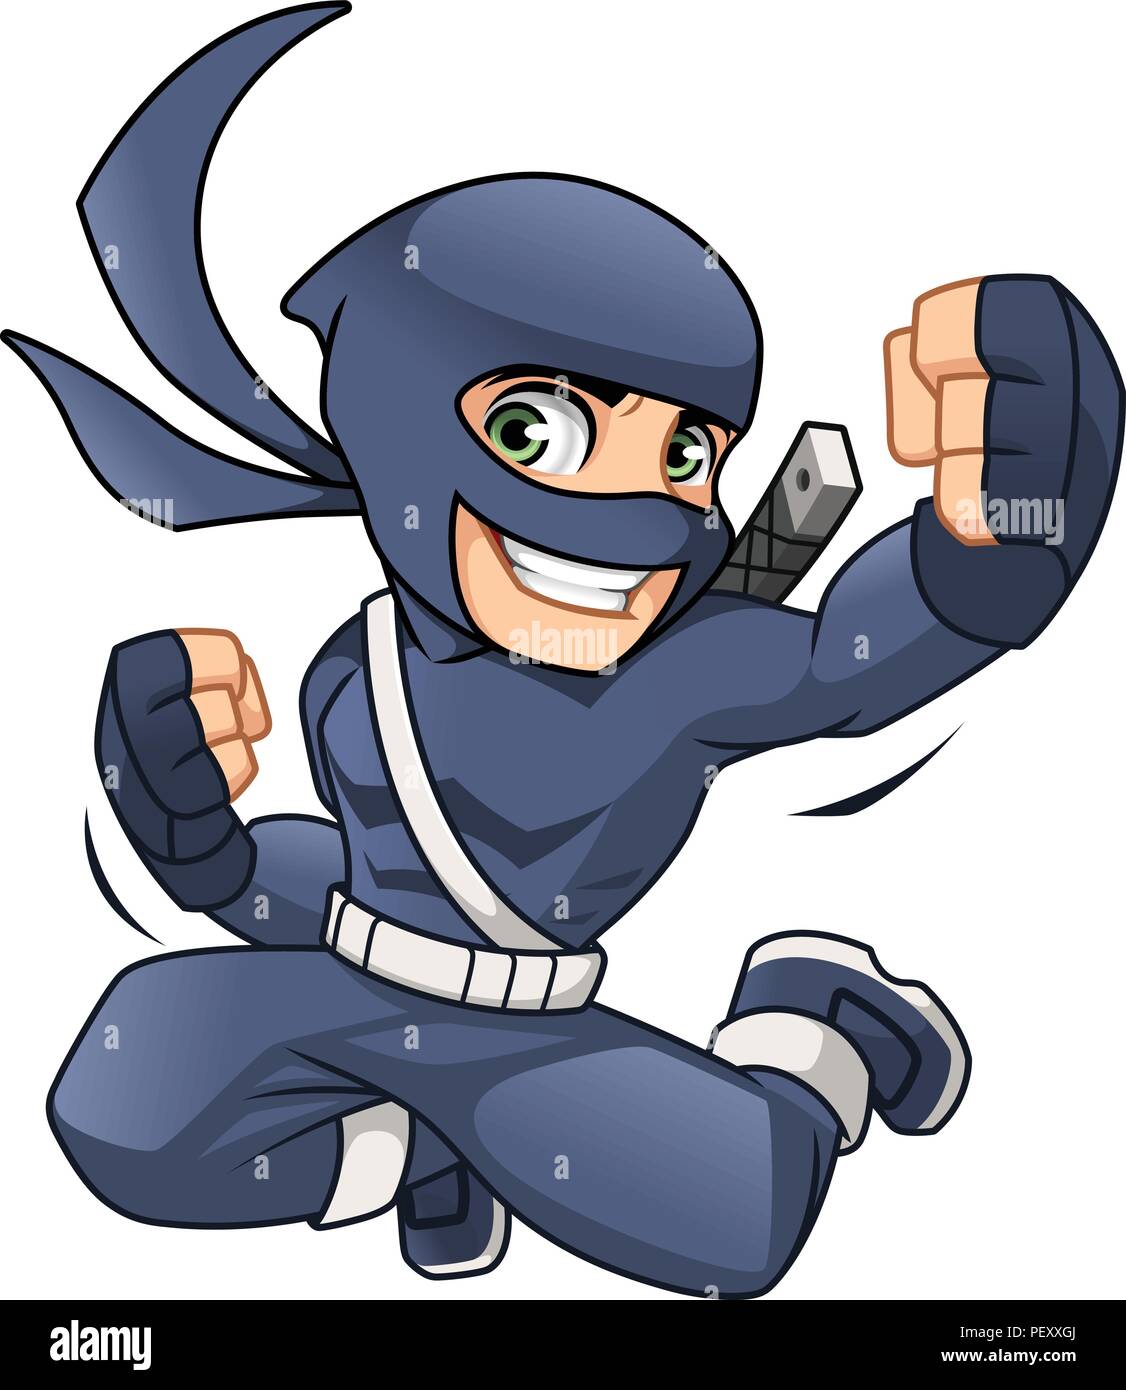 Ninja springt mit seiner Hand erfolgreich Cartoon Character Design Vector Illustration Stock Vektor